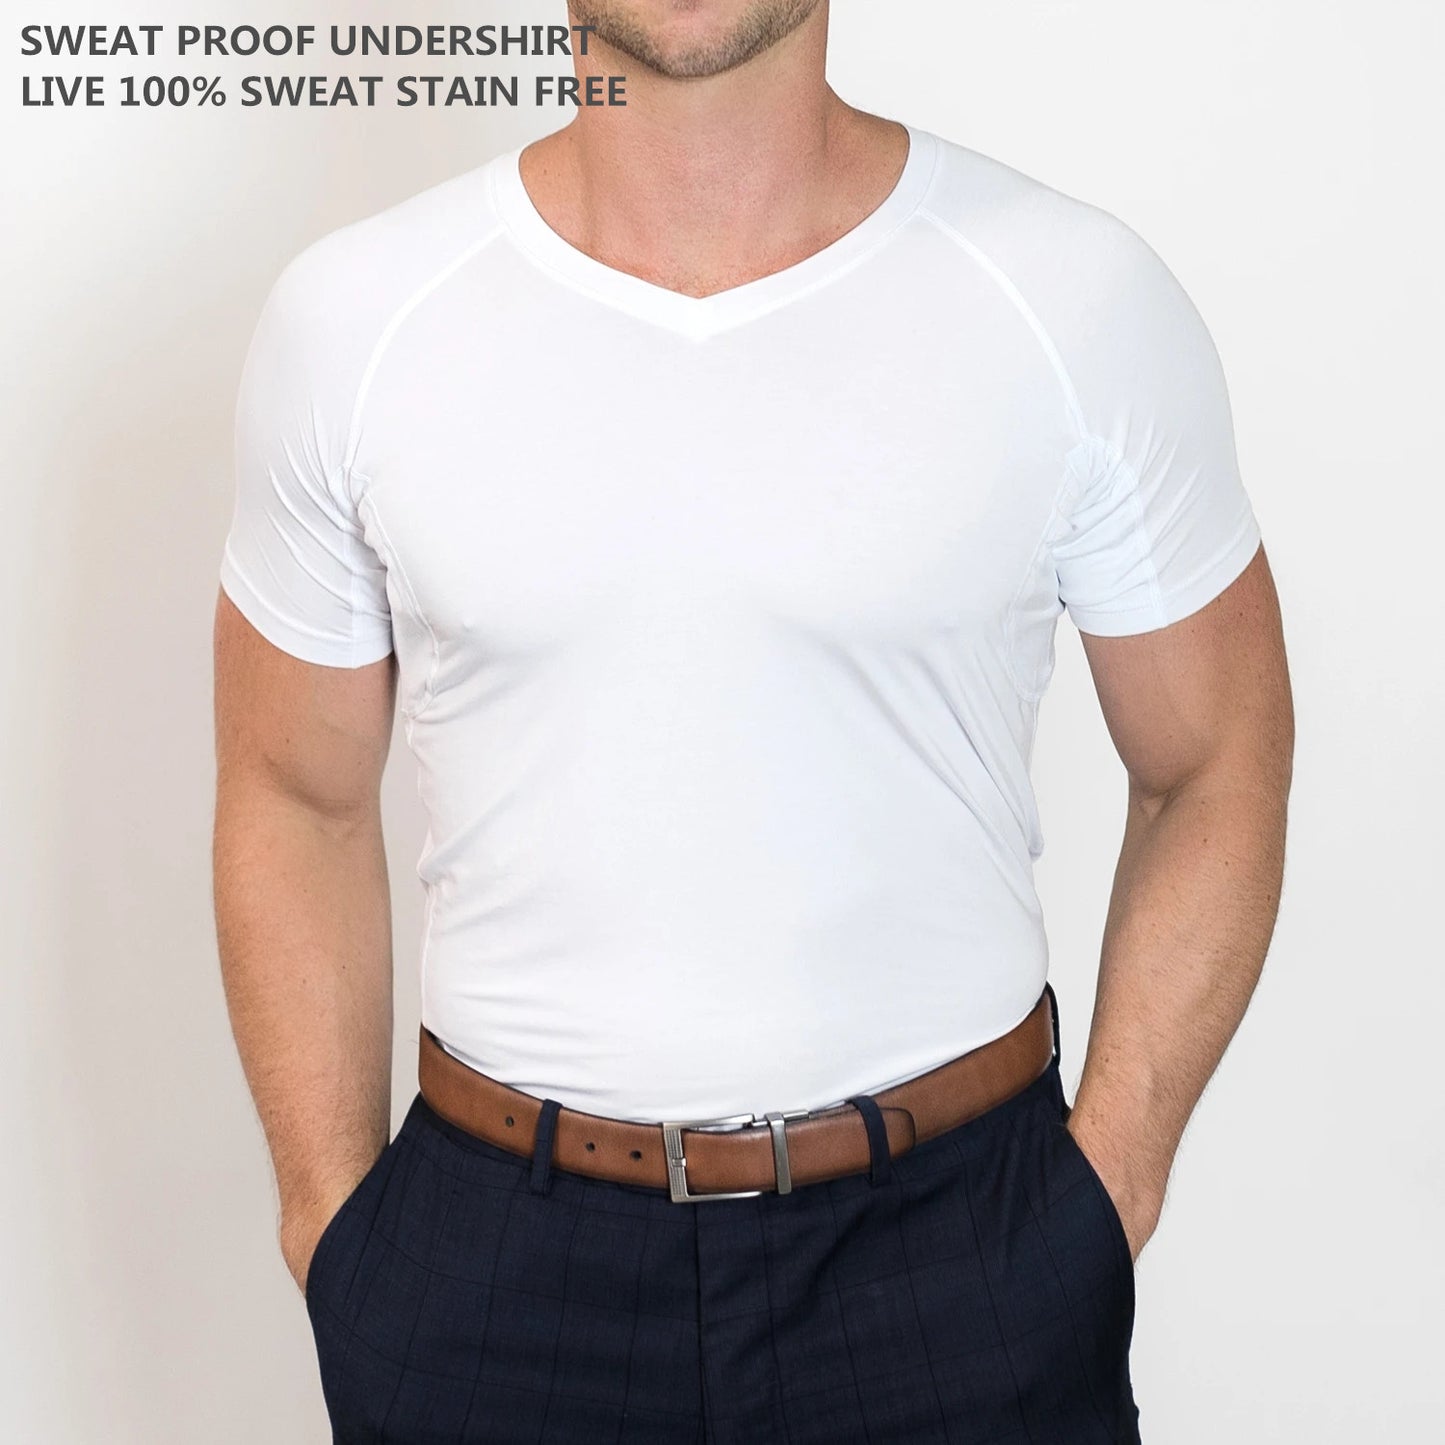 Basic V Neck Anti Perspiration T Shirt Sweatproof Undershirts for Men Solid Modal Tee